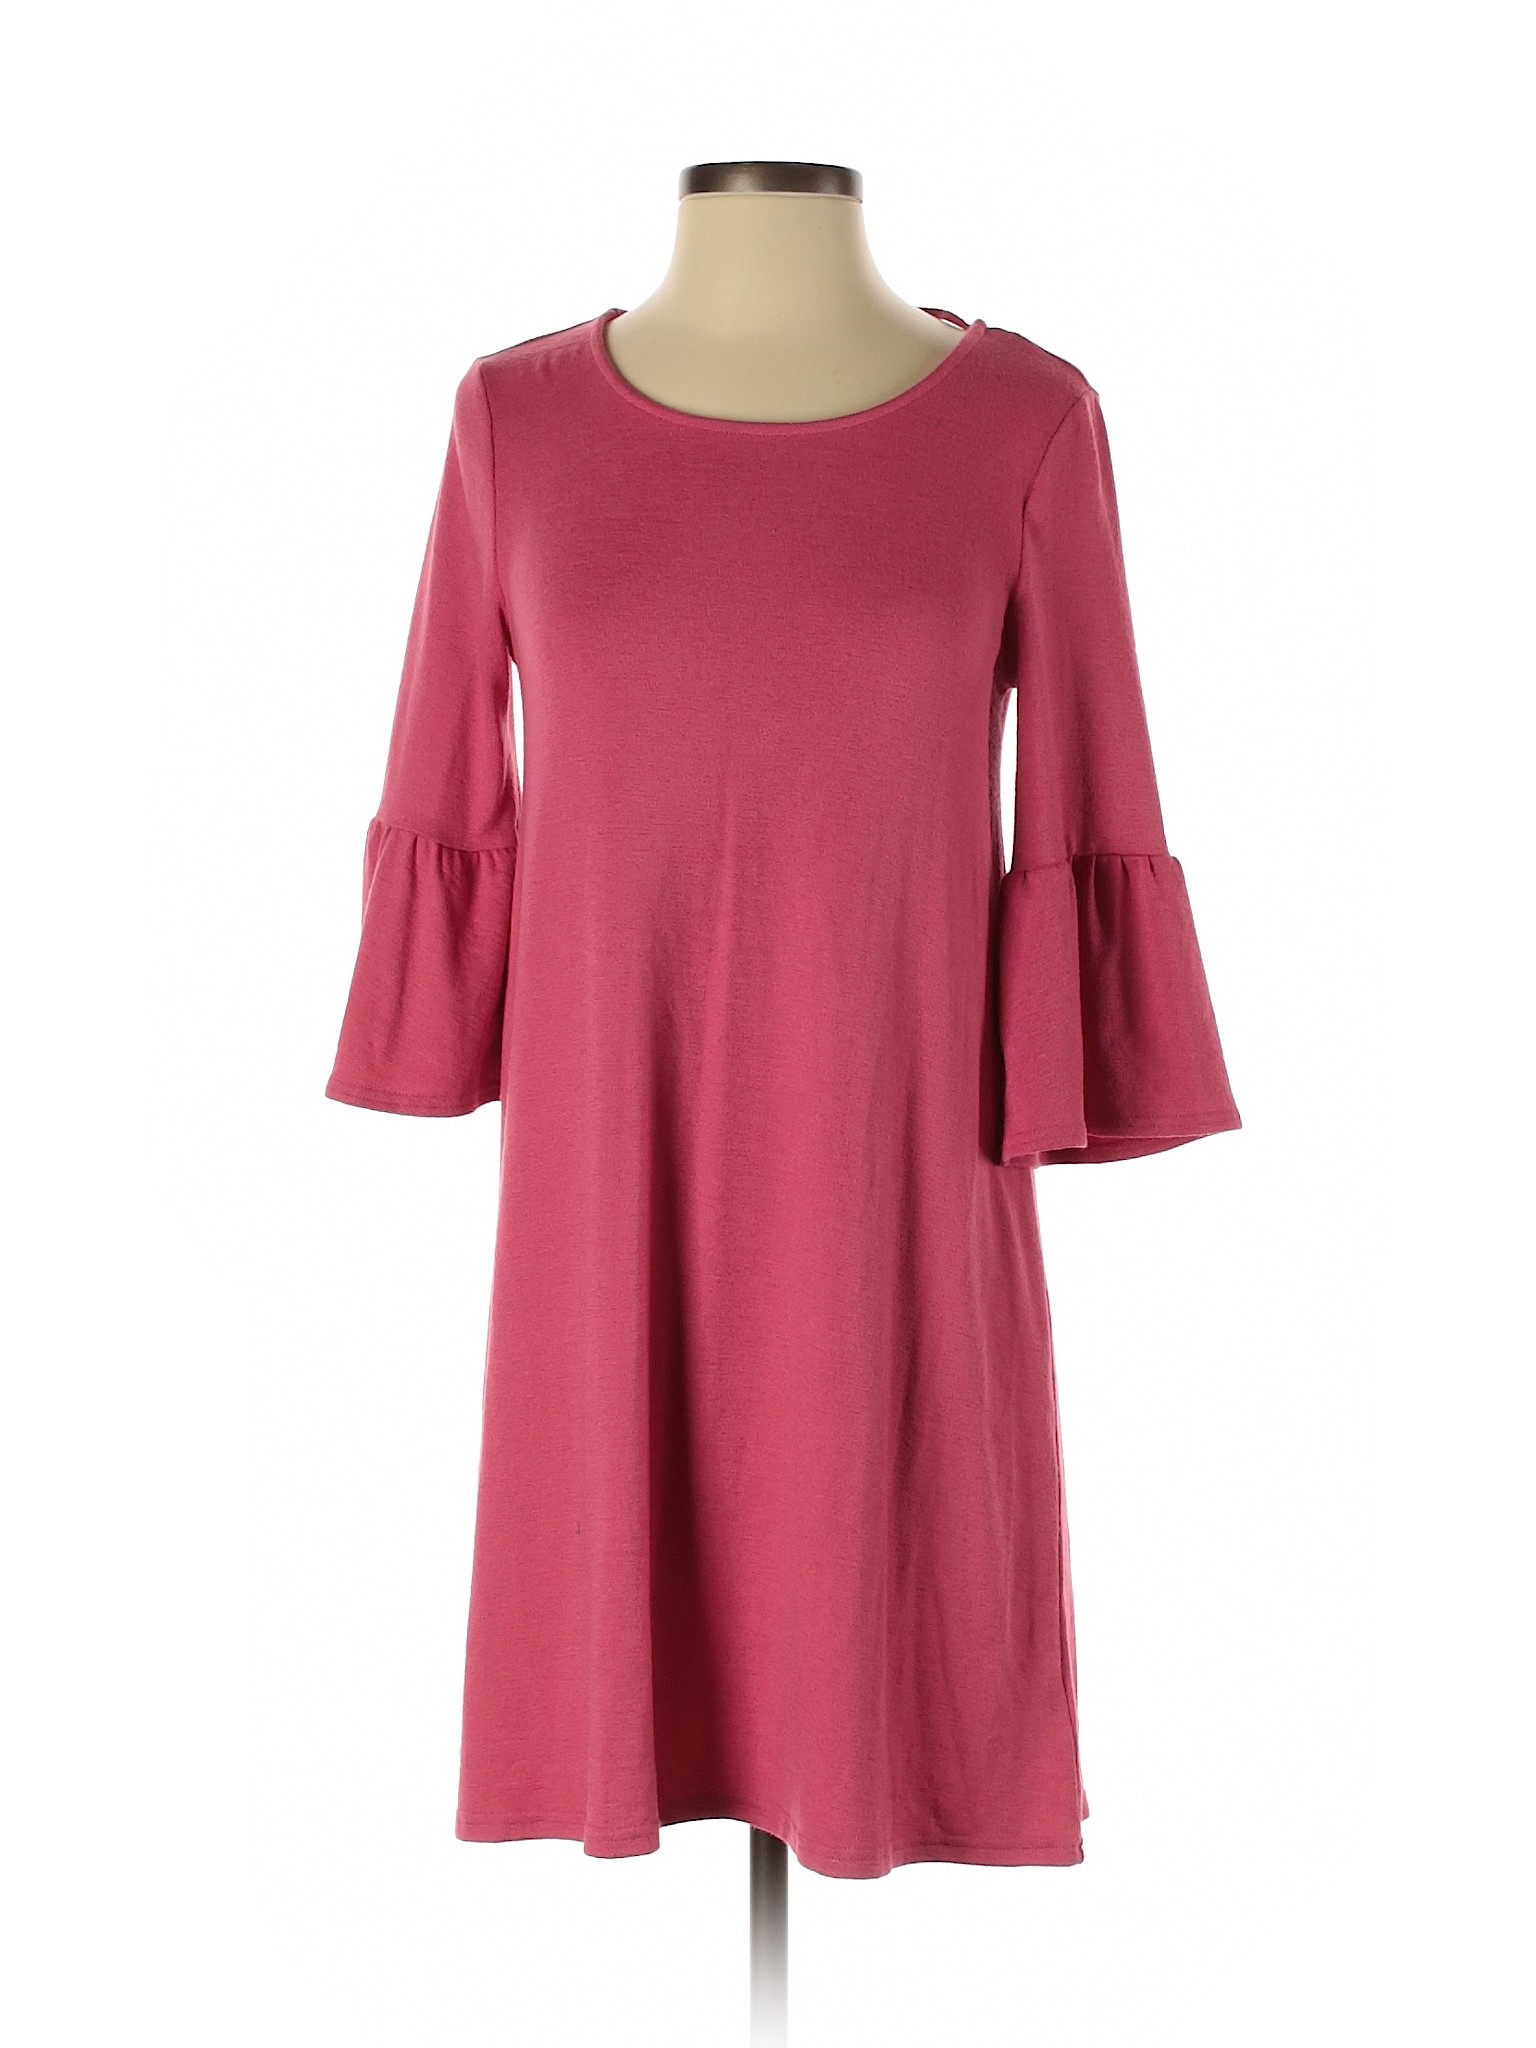 Gap Women Pink Casual Dress XS Petites | eBay